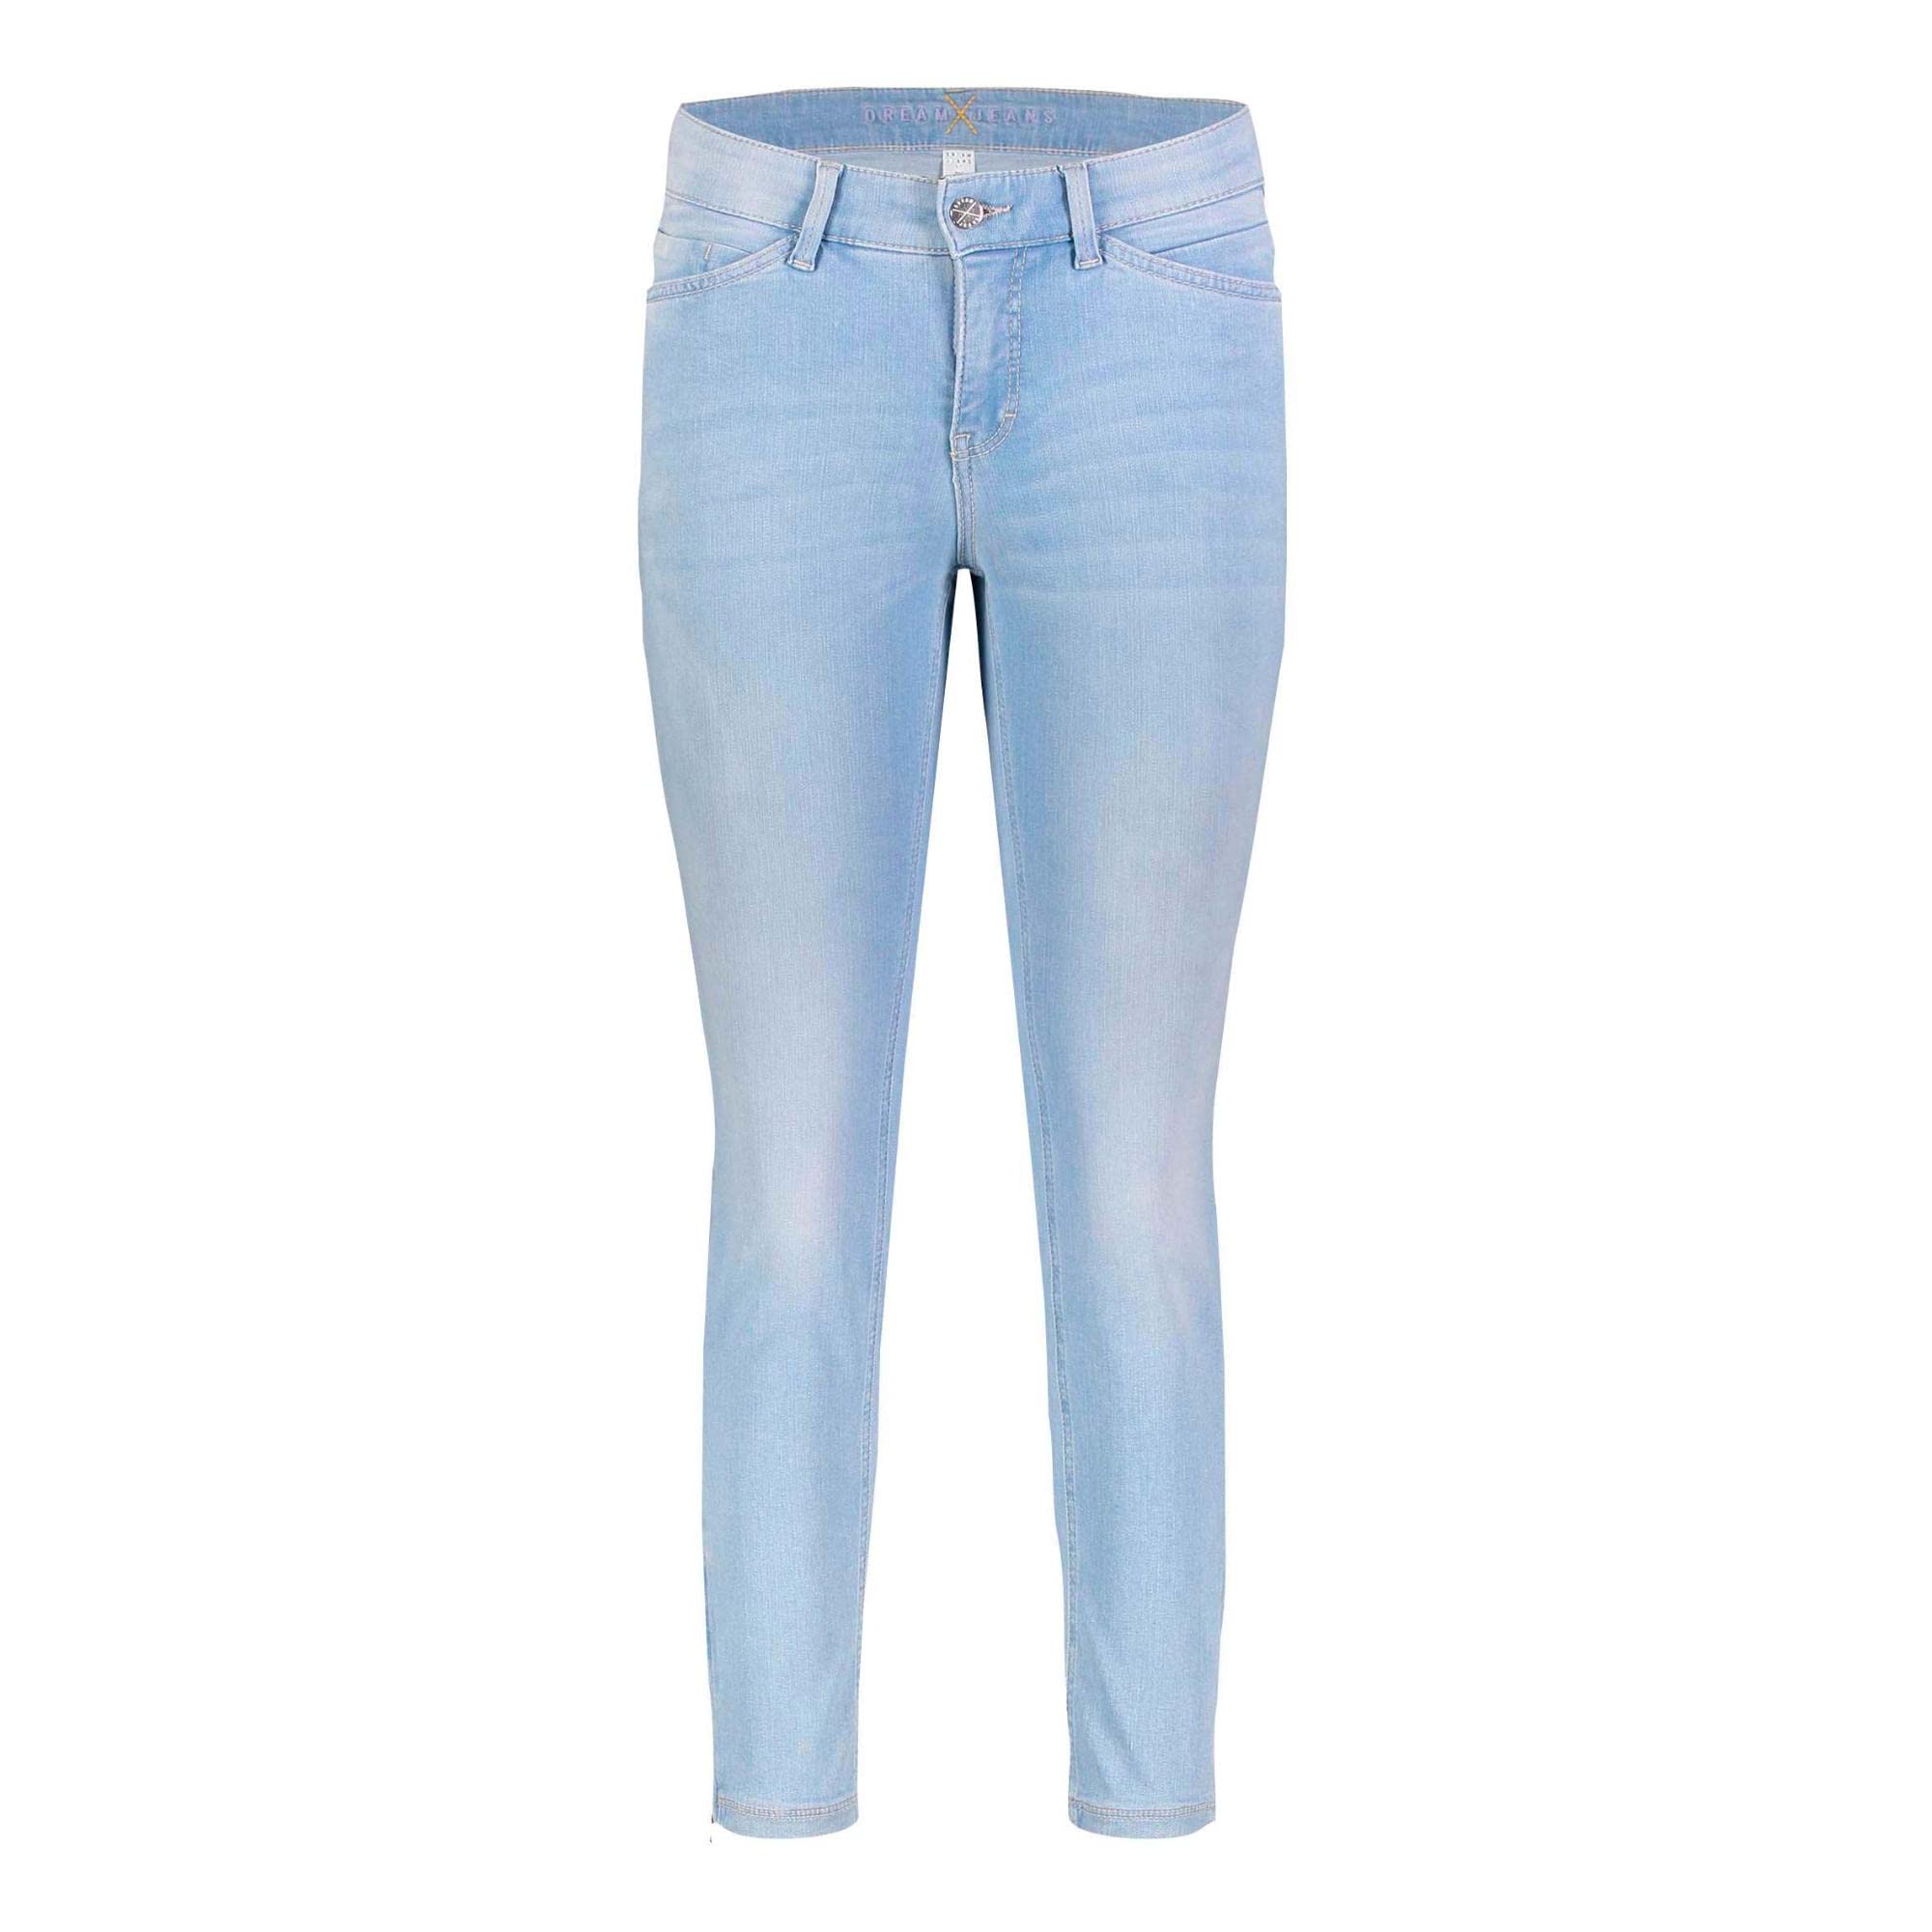 MAC JEANS Damen DREAM CHIC Jeans, Summer Blue Wash D427, 34W x 27L (Größe: 34/27)